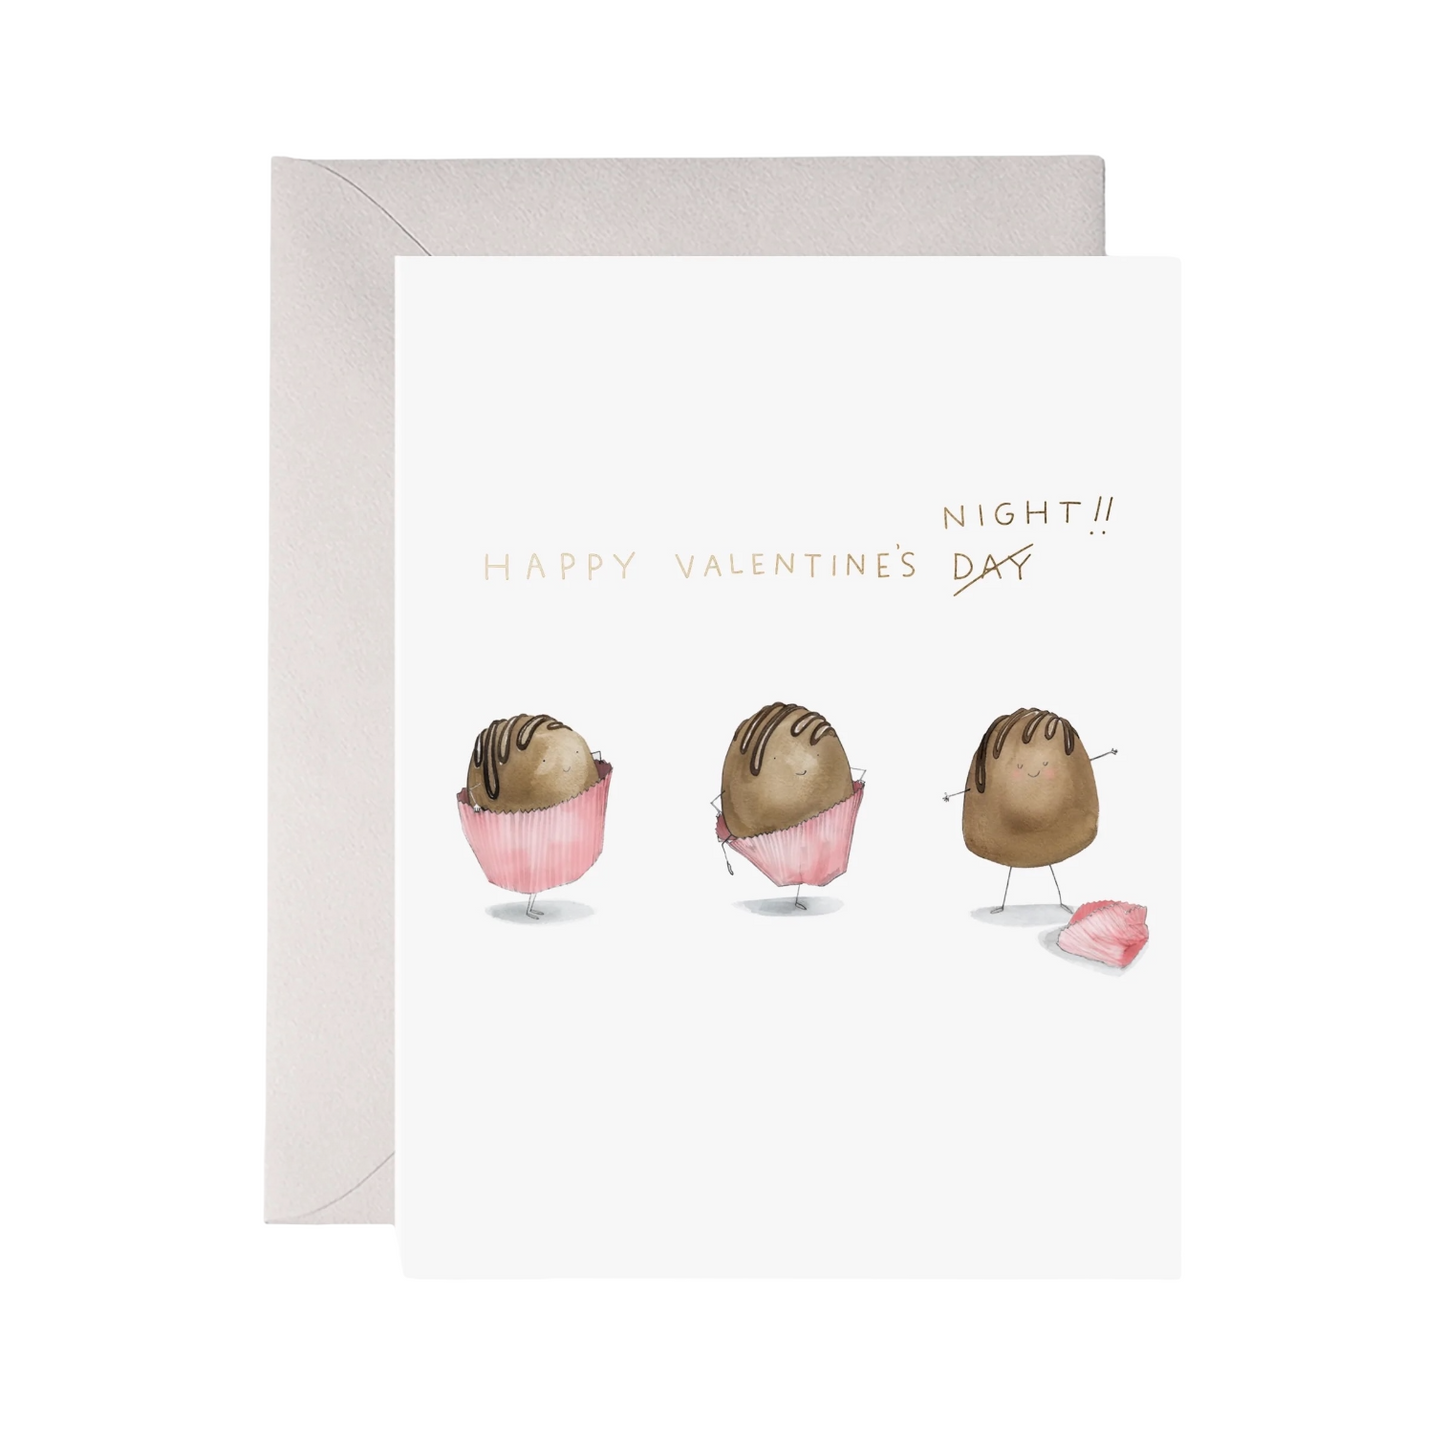 Chocolate Striptease Valentine's Card by E. Frances Paper